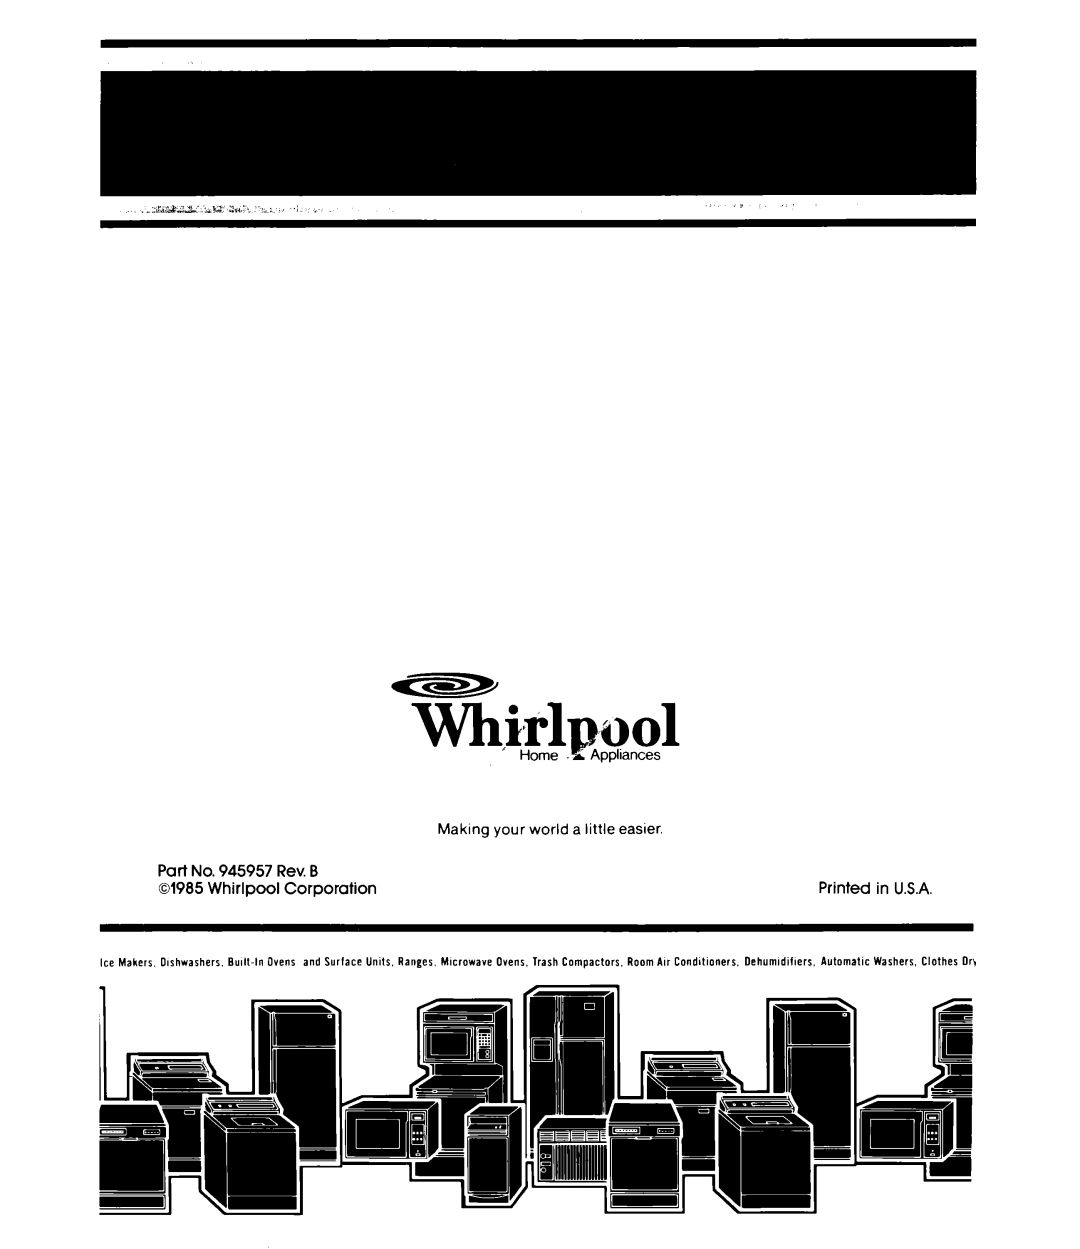 Whirlpool ELl5CCXR manual 7&idJBUOl, Appliances, Making your world a little easier, Part No, Rev. B, Whirlpool, Corporation 